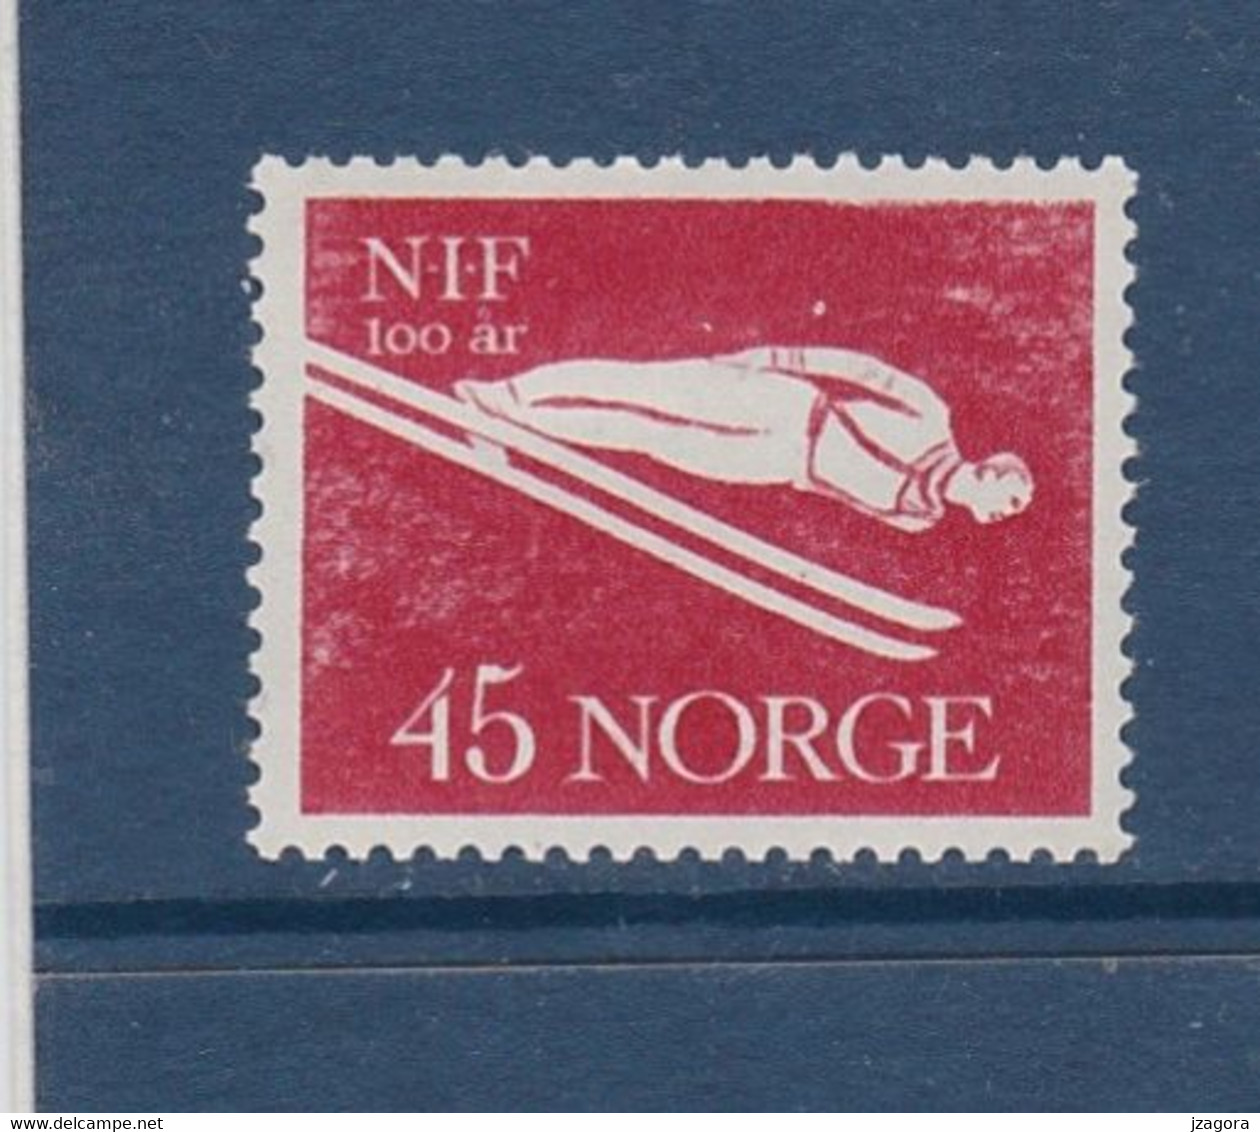 SKI JUMPING SKISPRINGEN  NORWAY NORGE NORWEGEN NORVÈGE 1961 MI 454 MINT HINGED - Ski